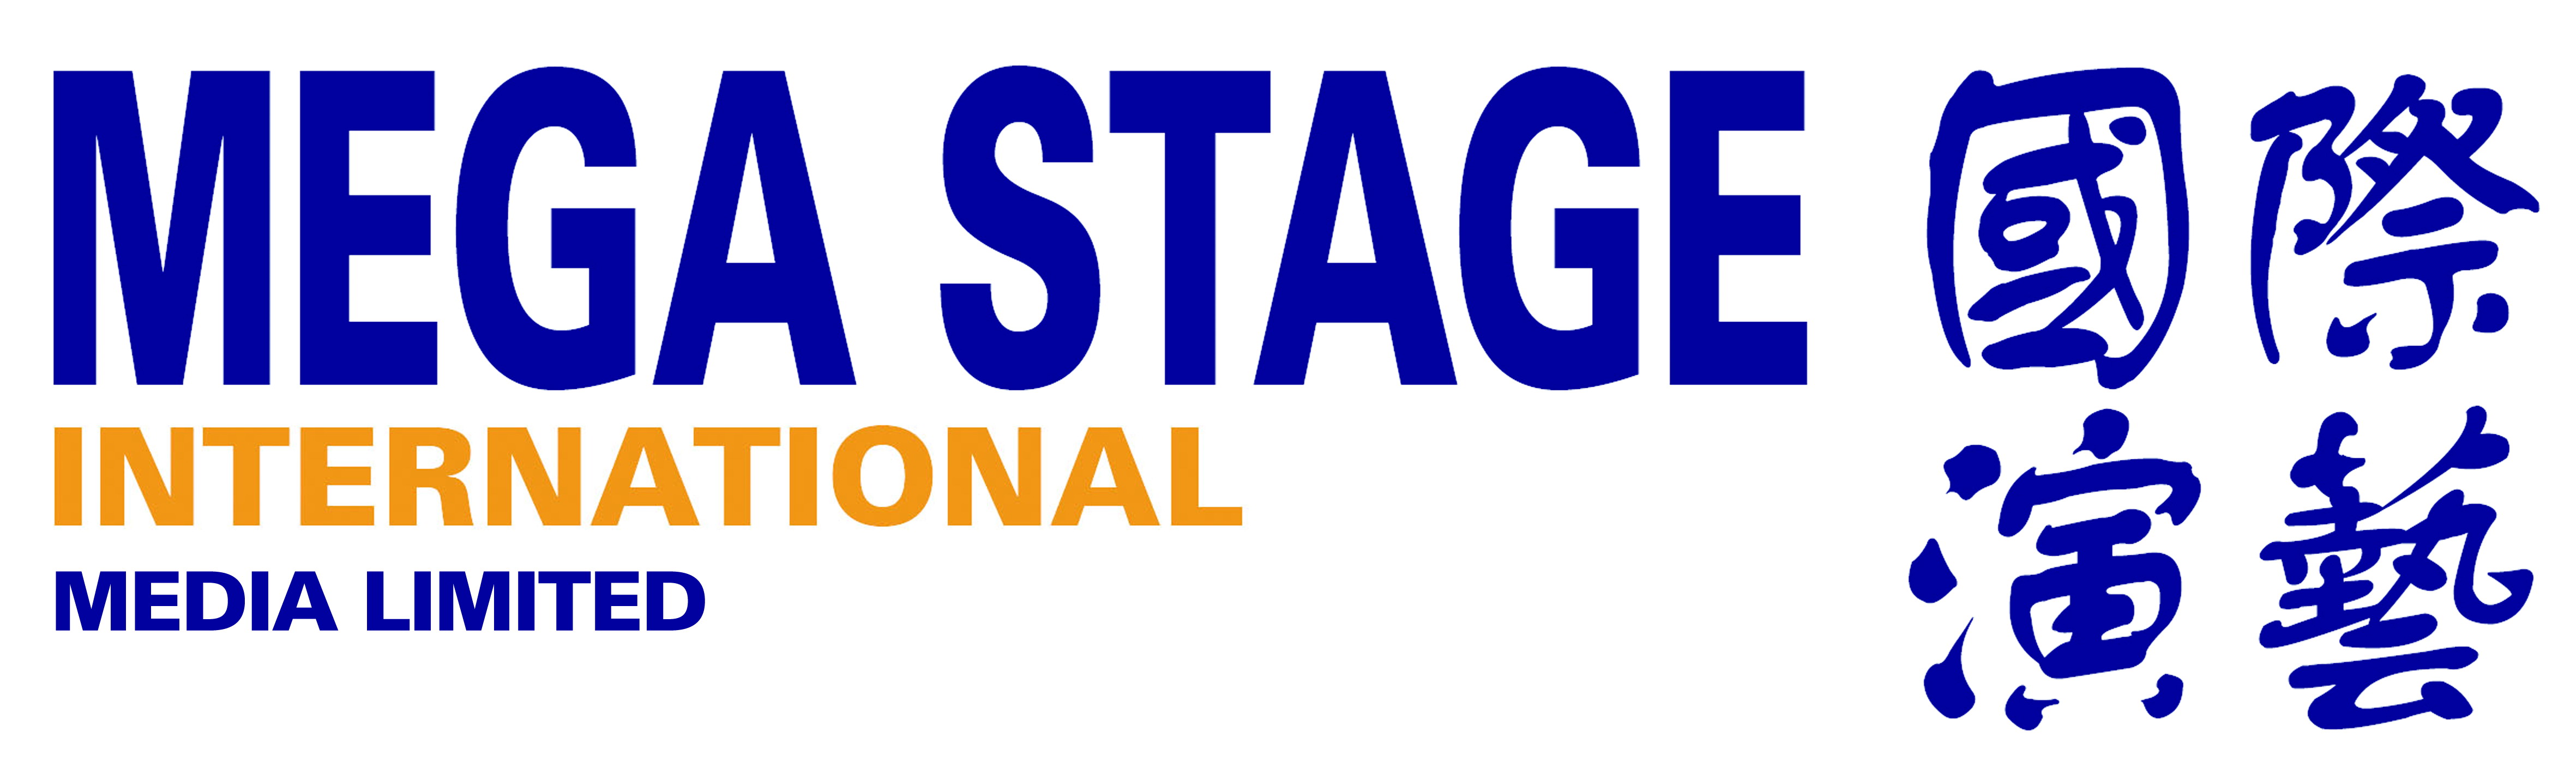 Mega Stage Logo